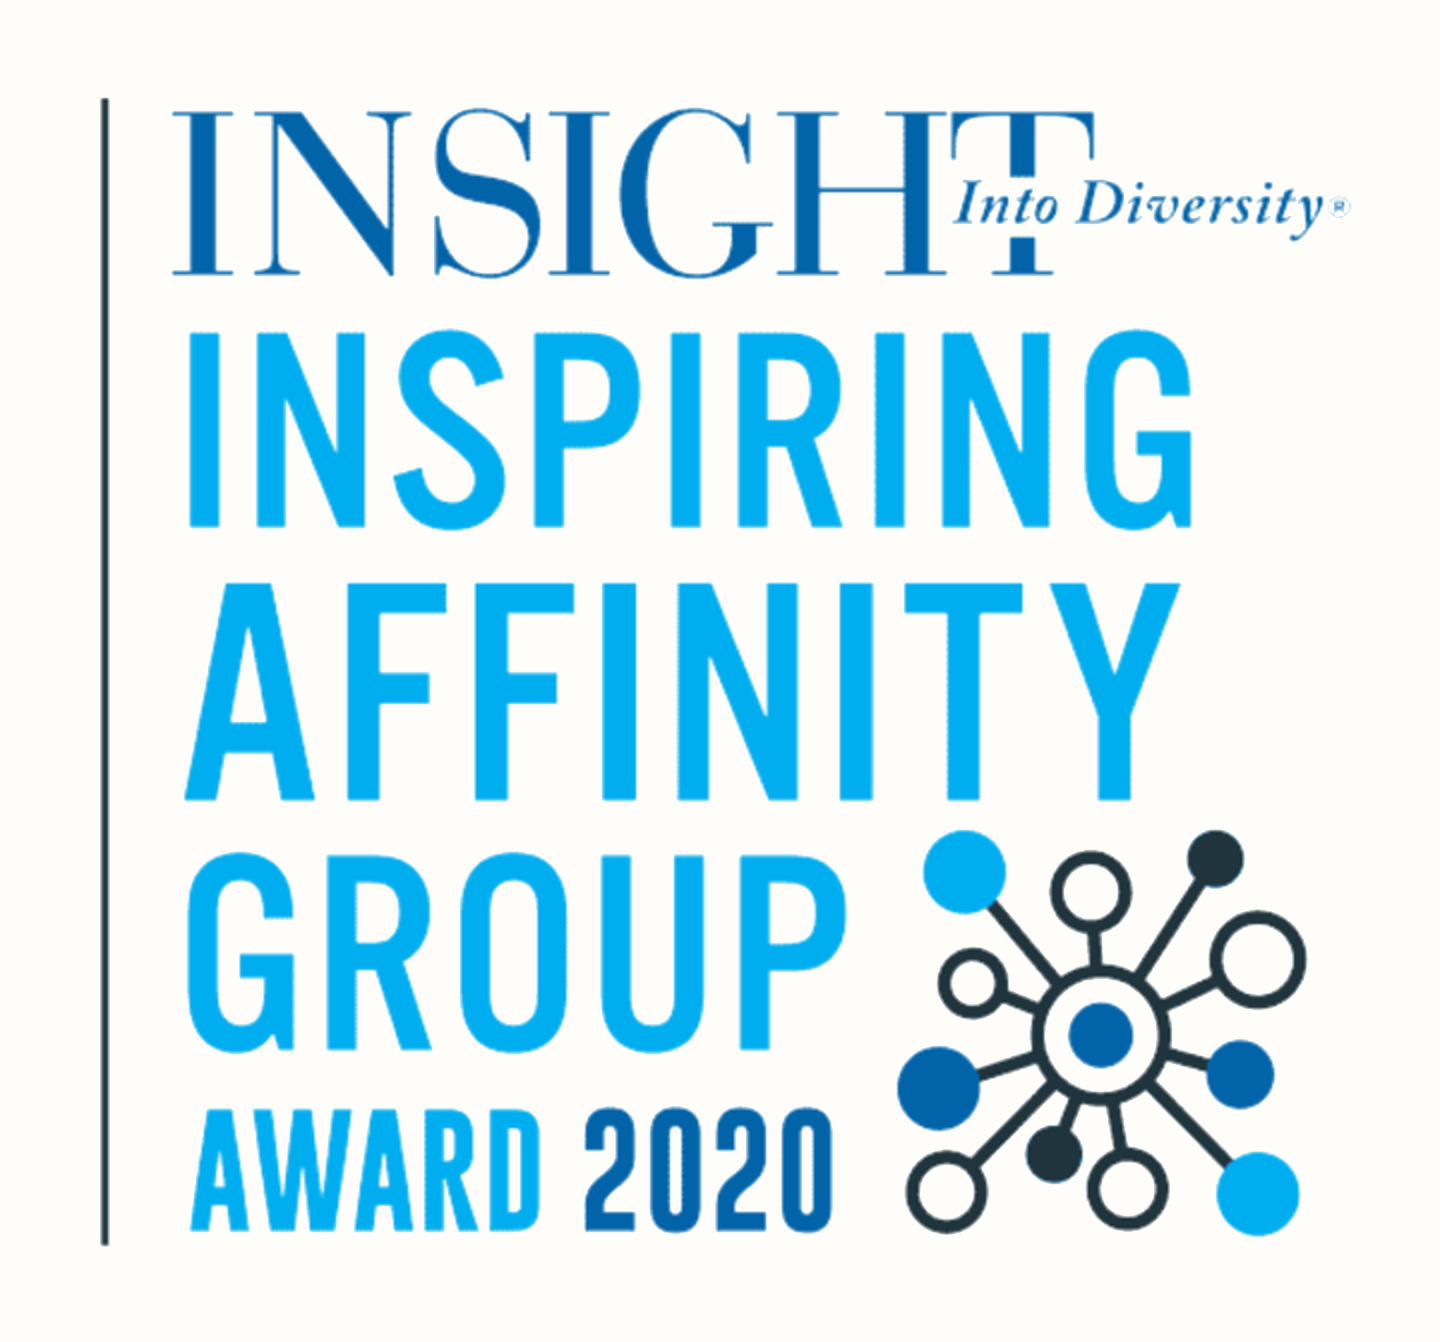 Insight Inspiring Affinity Group Award 2020